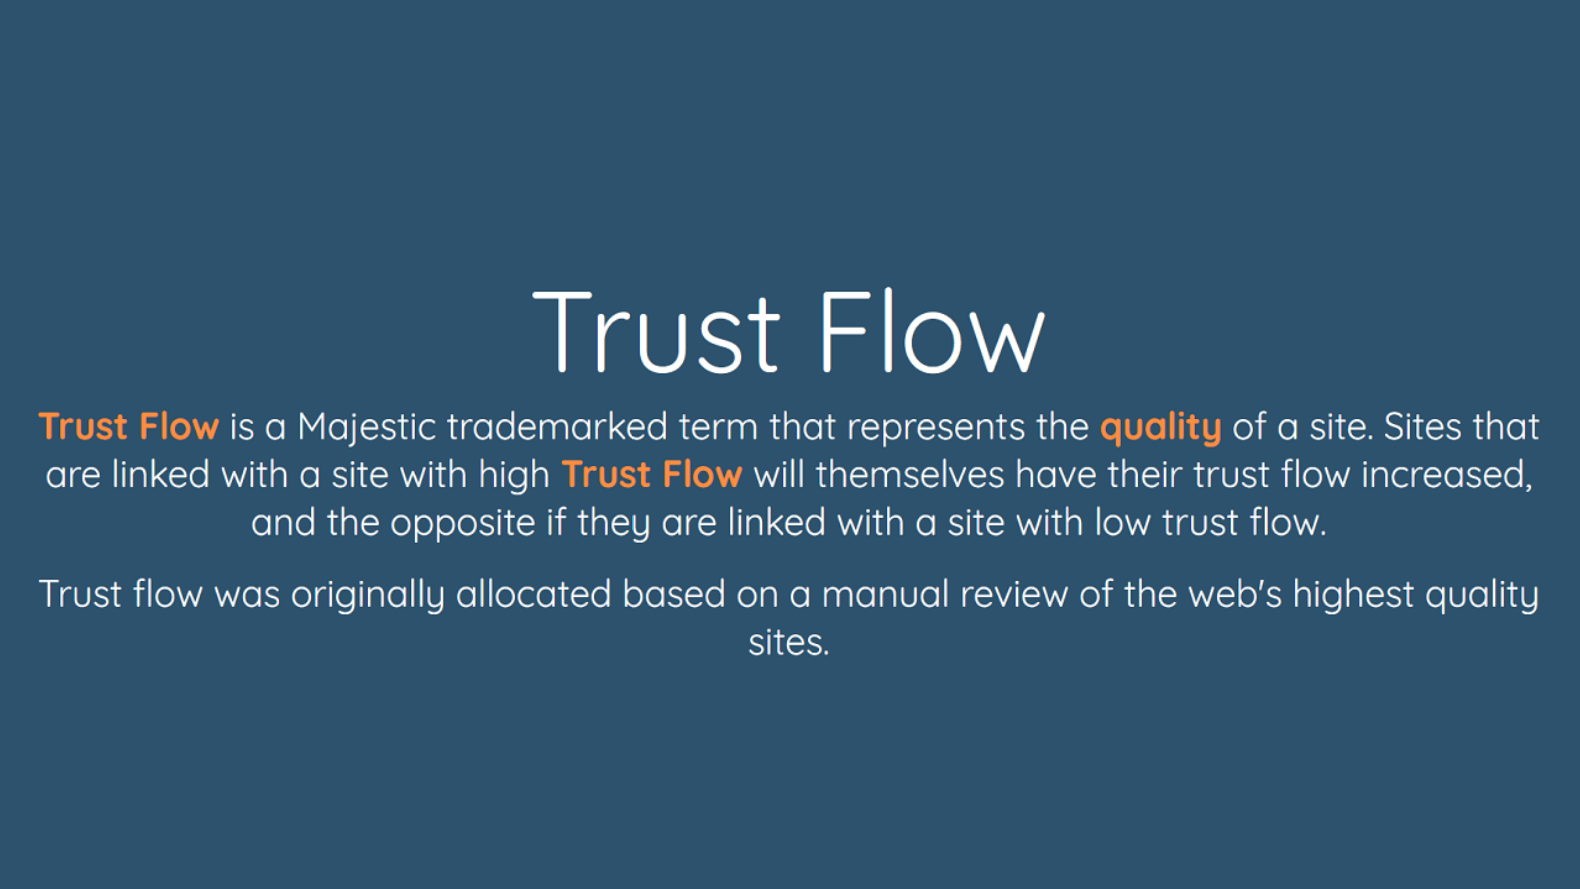 Explanation of trust flow